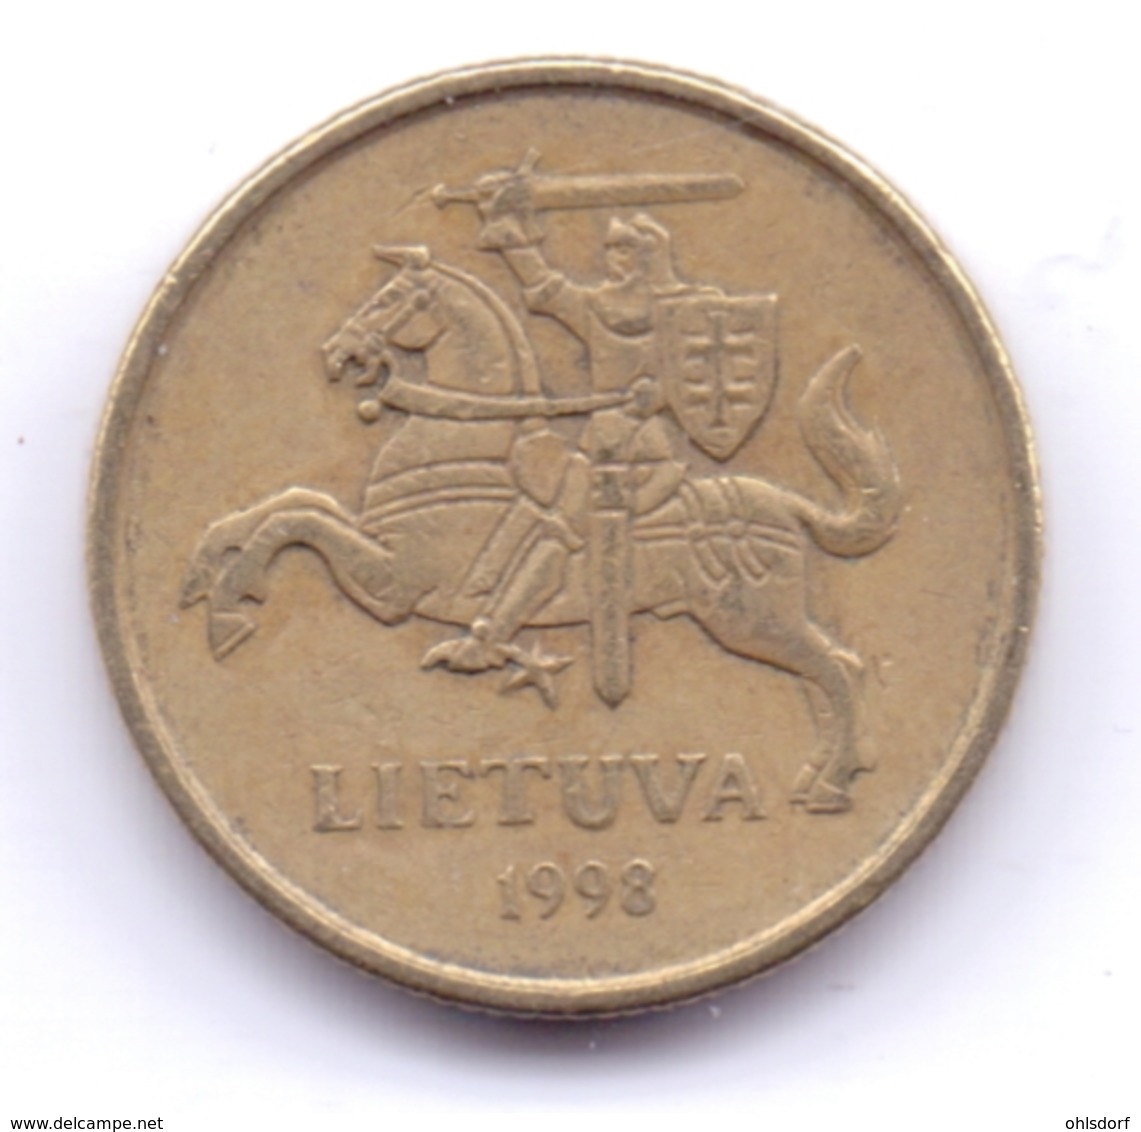 LIETUVA 1998: 20 Centu, KM 107 - Lituania